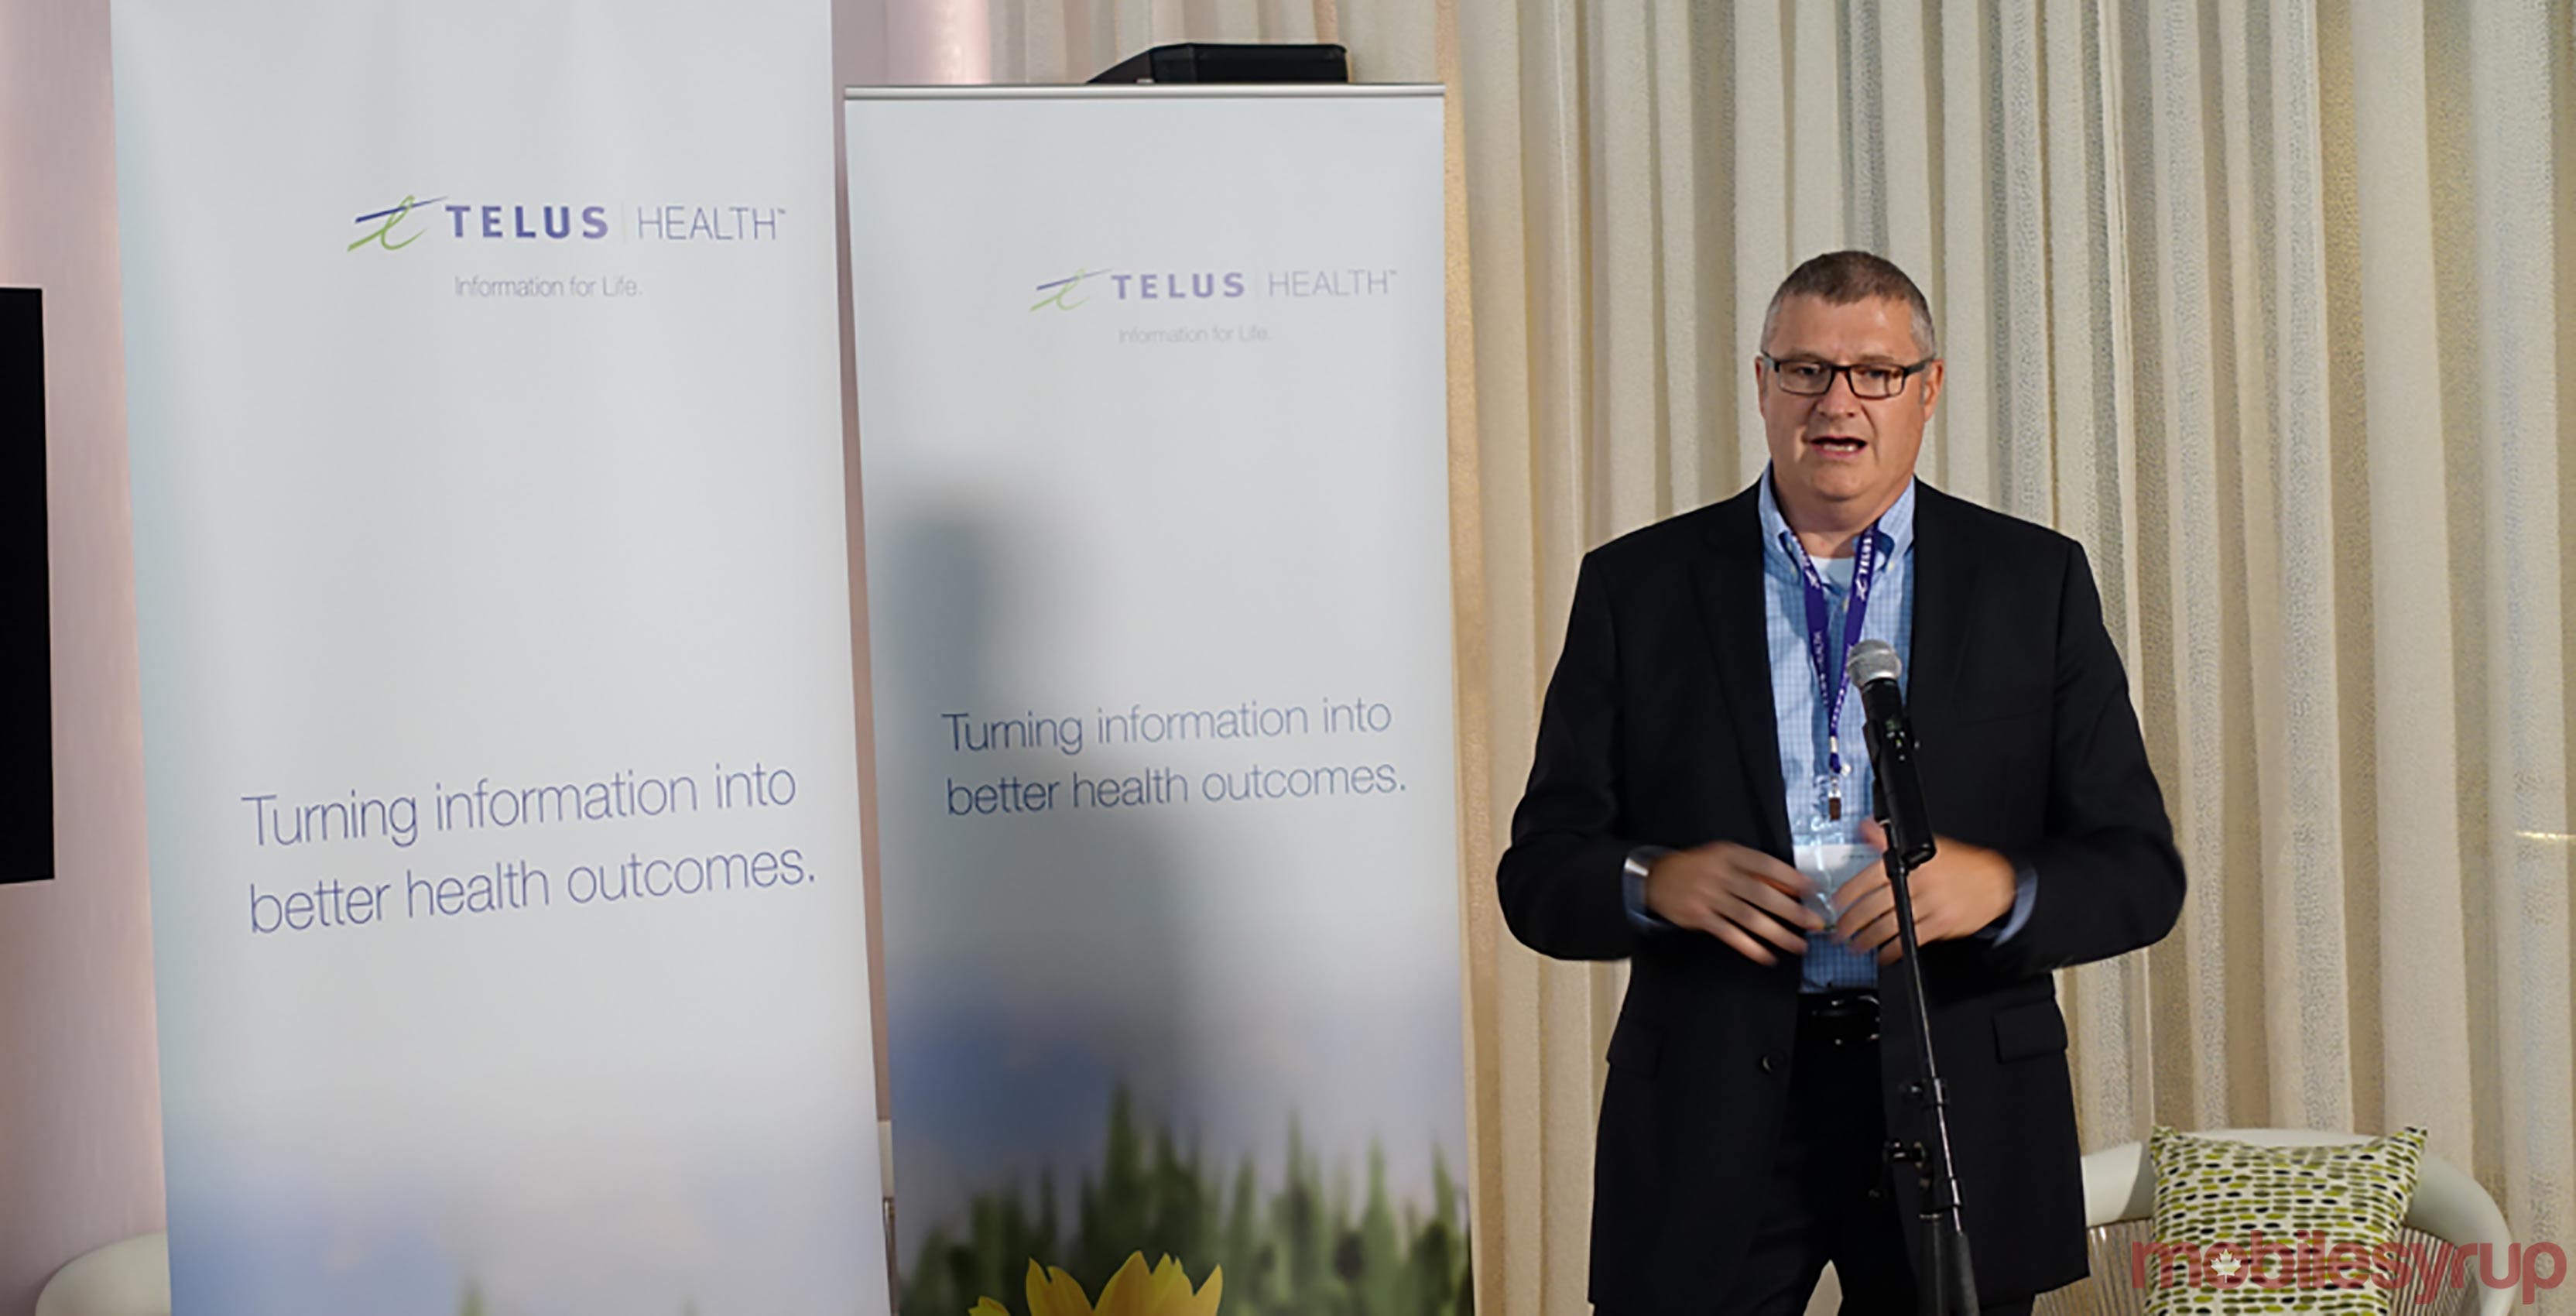 Paul Lepage, president of Telus Health